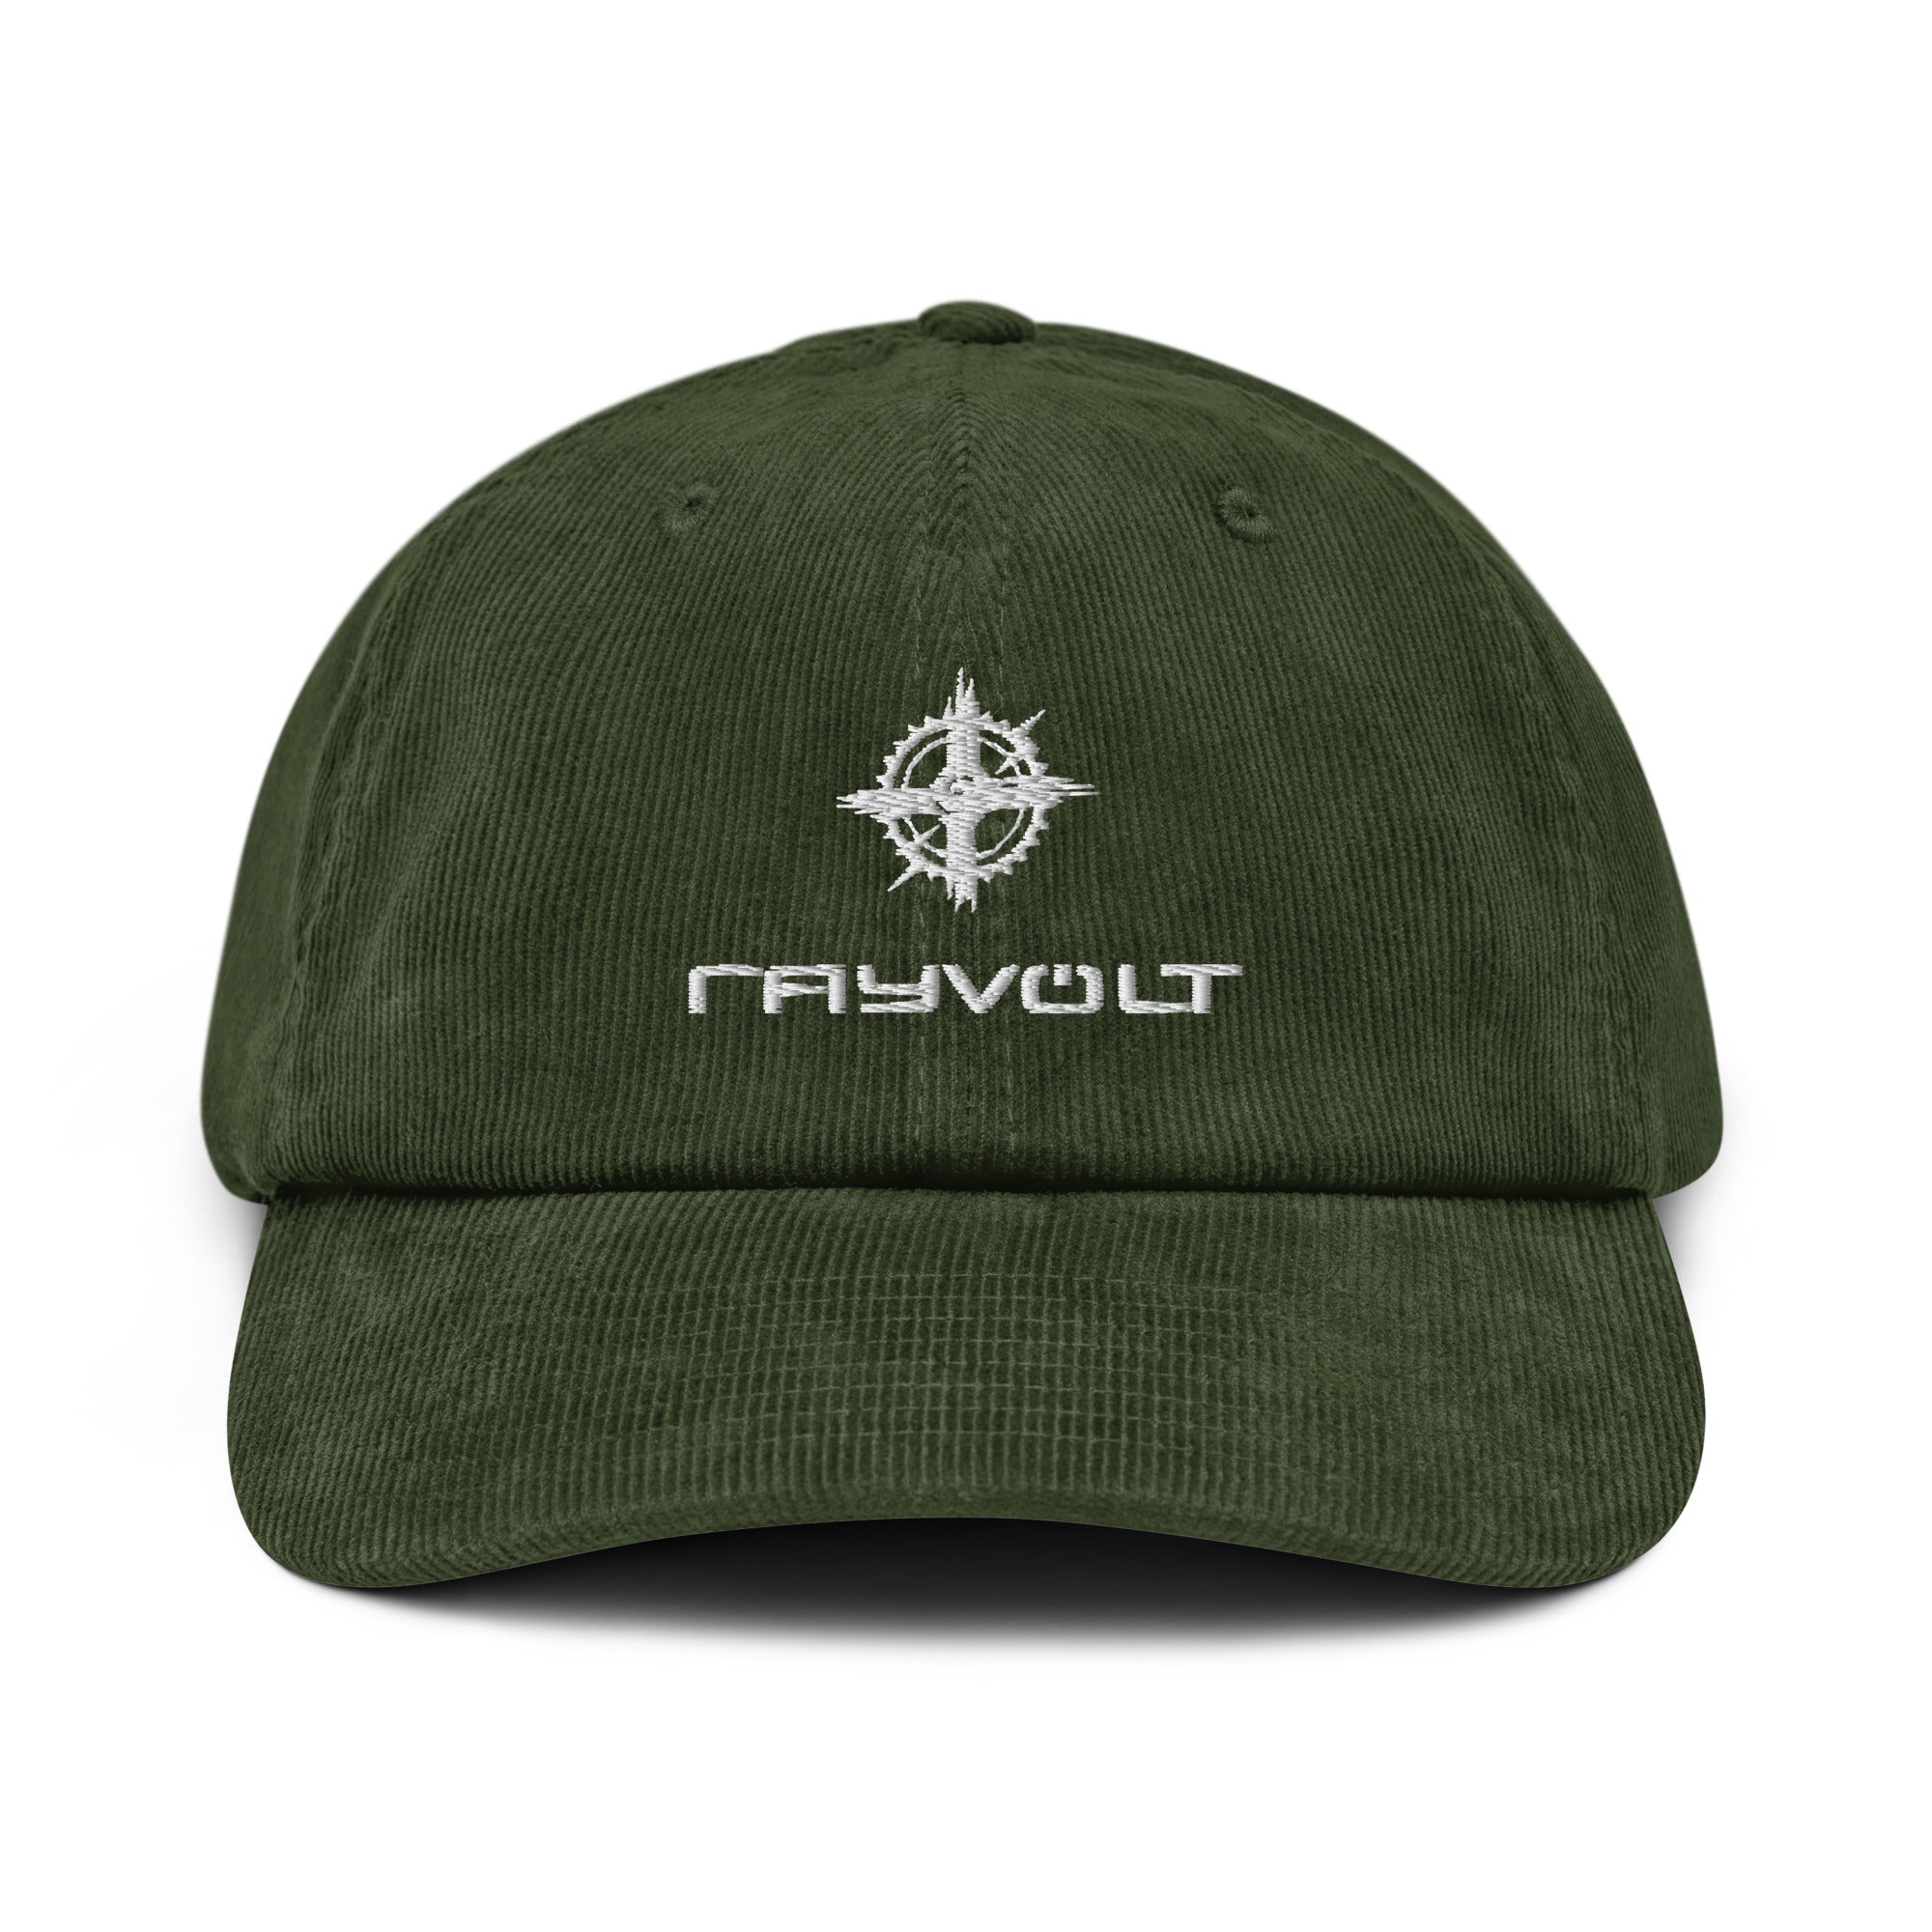 Rayvolt Corduroy hat